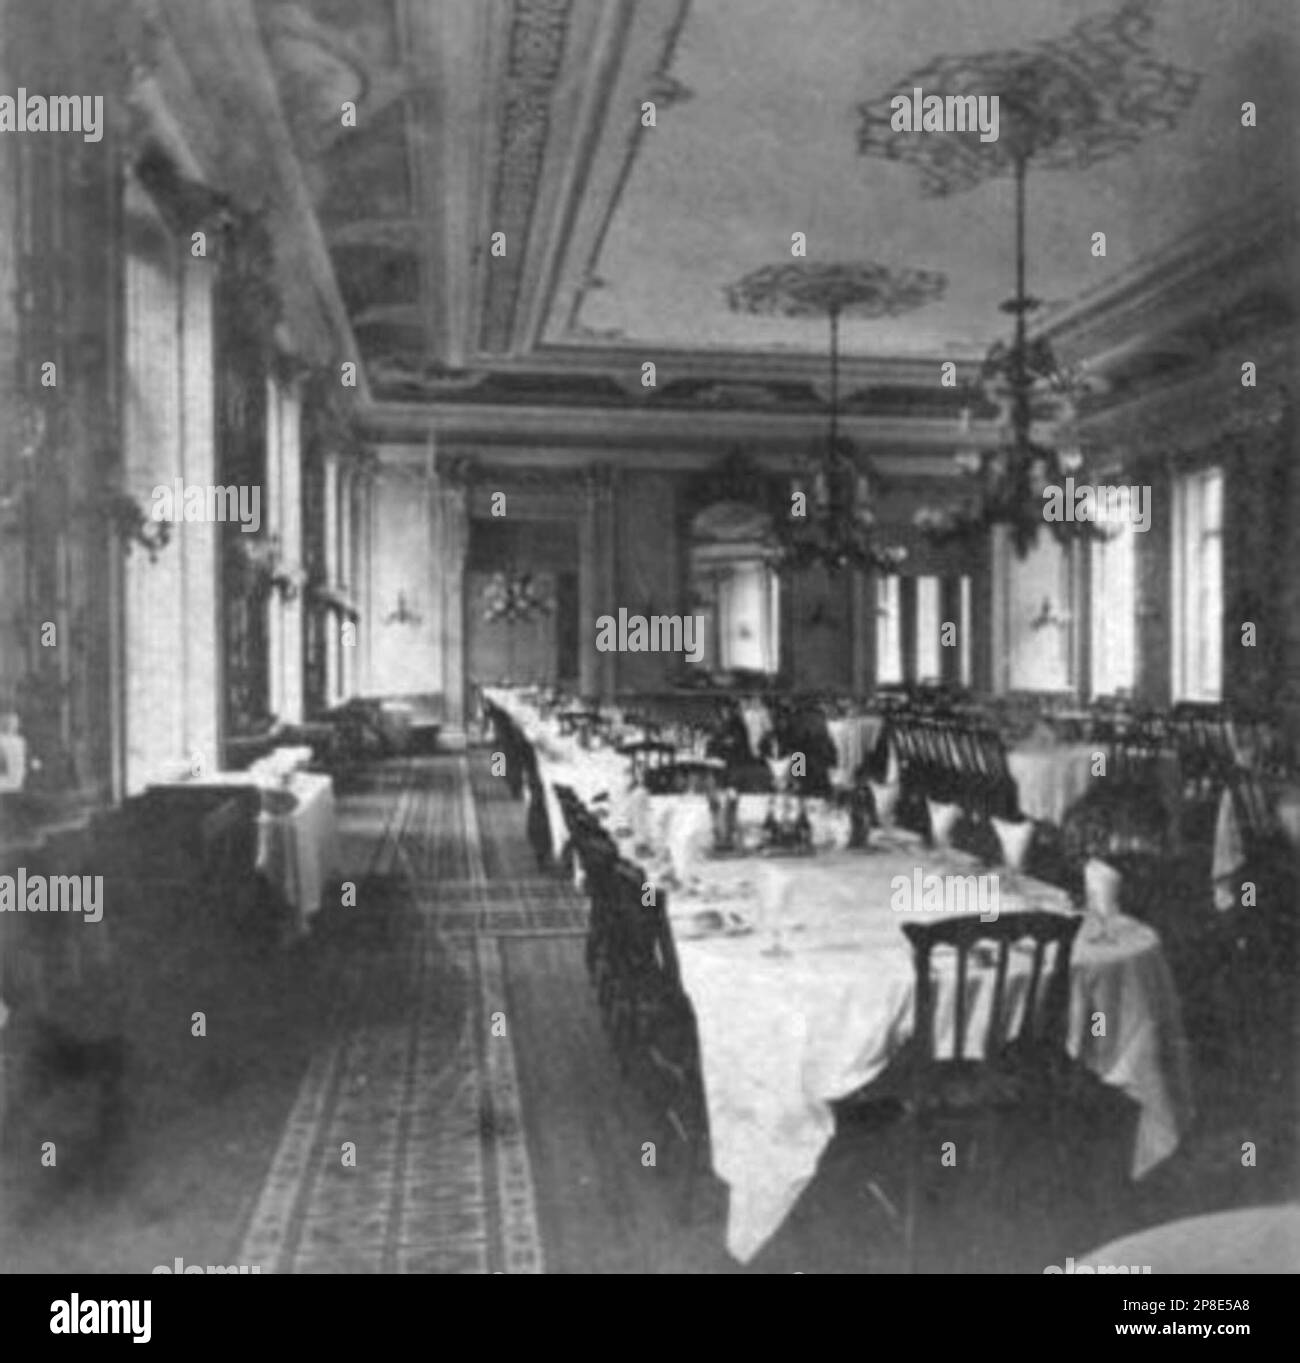 St Nicholas dining room Stock Photo